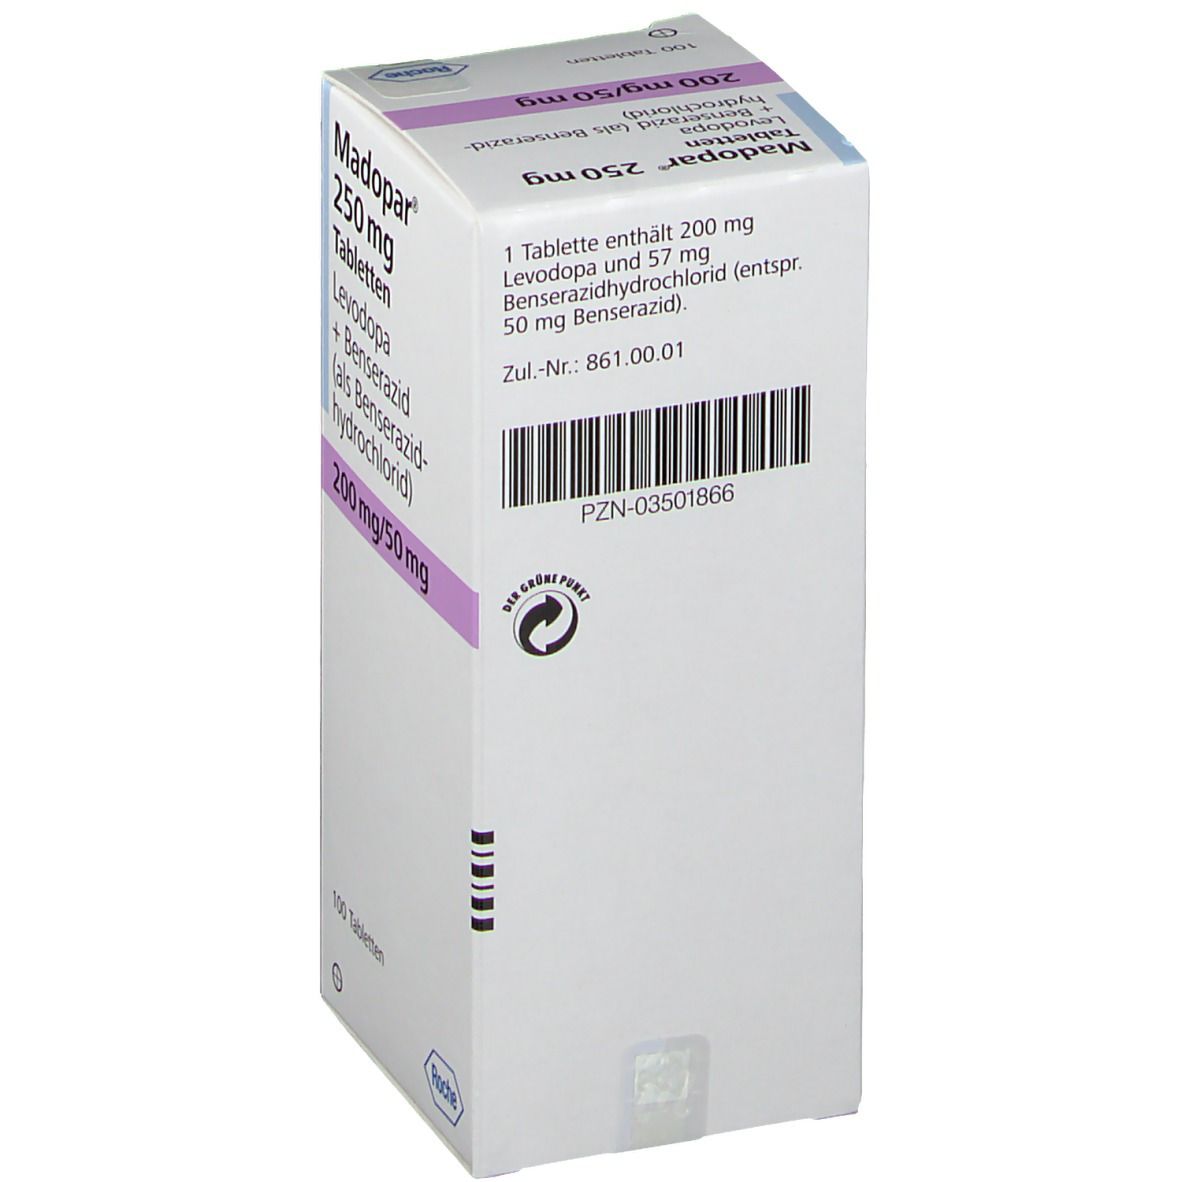 Madopar® 250 mg